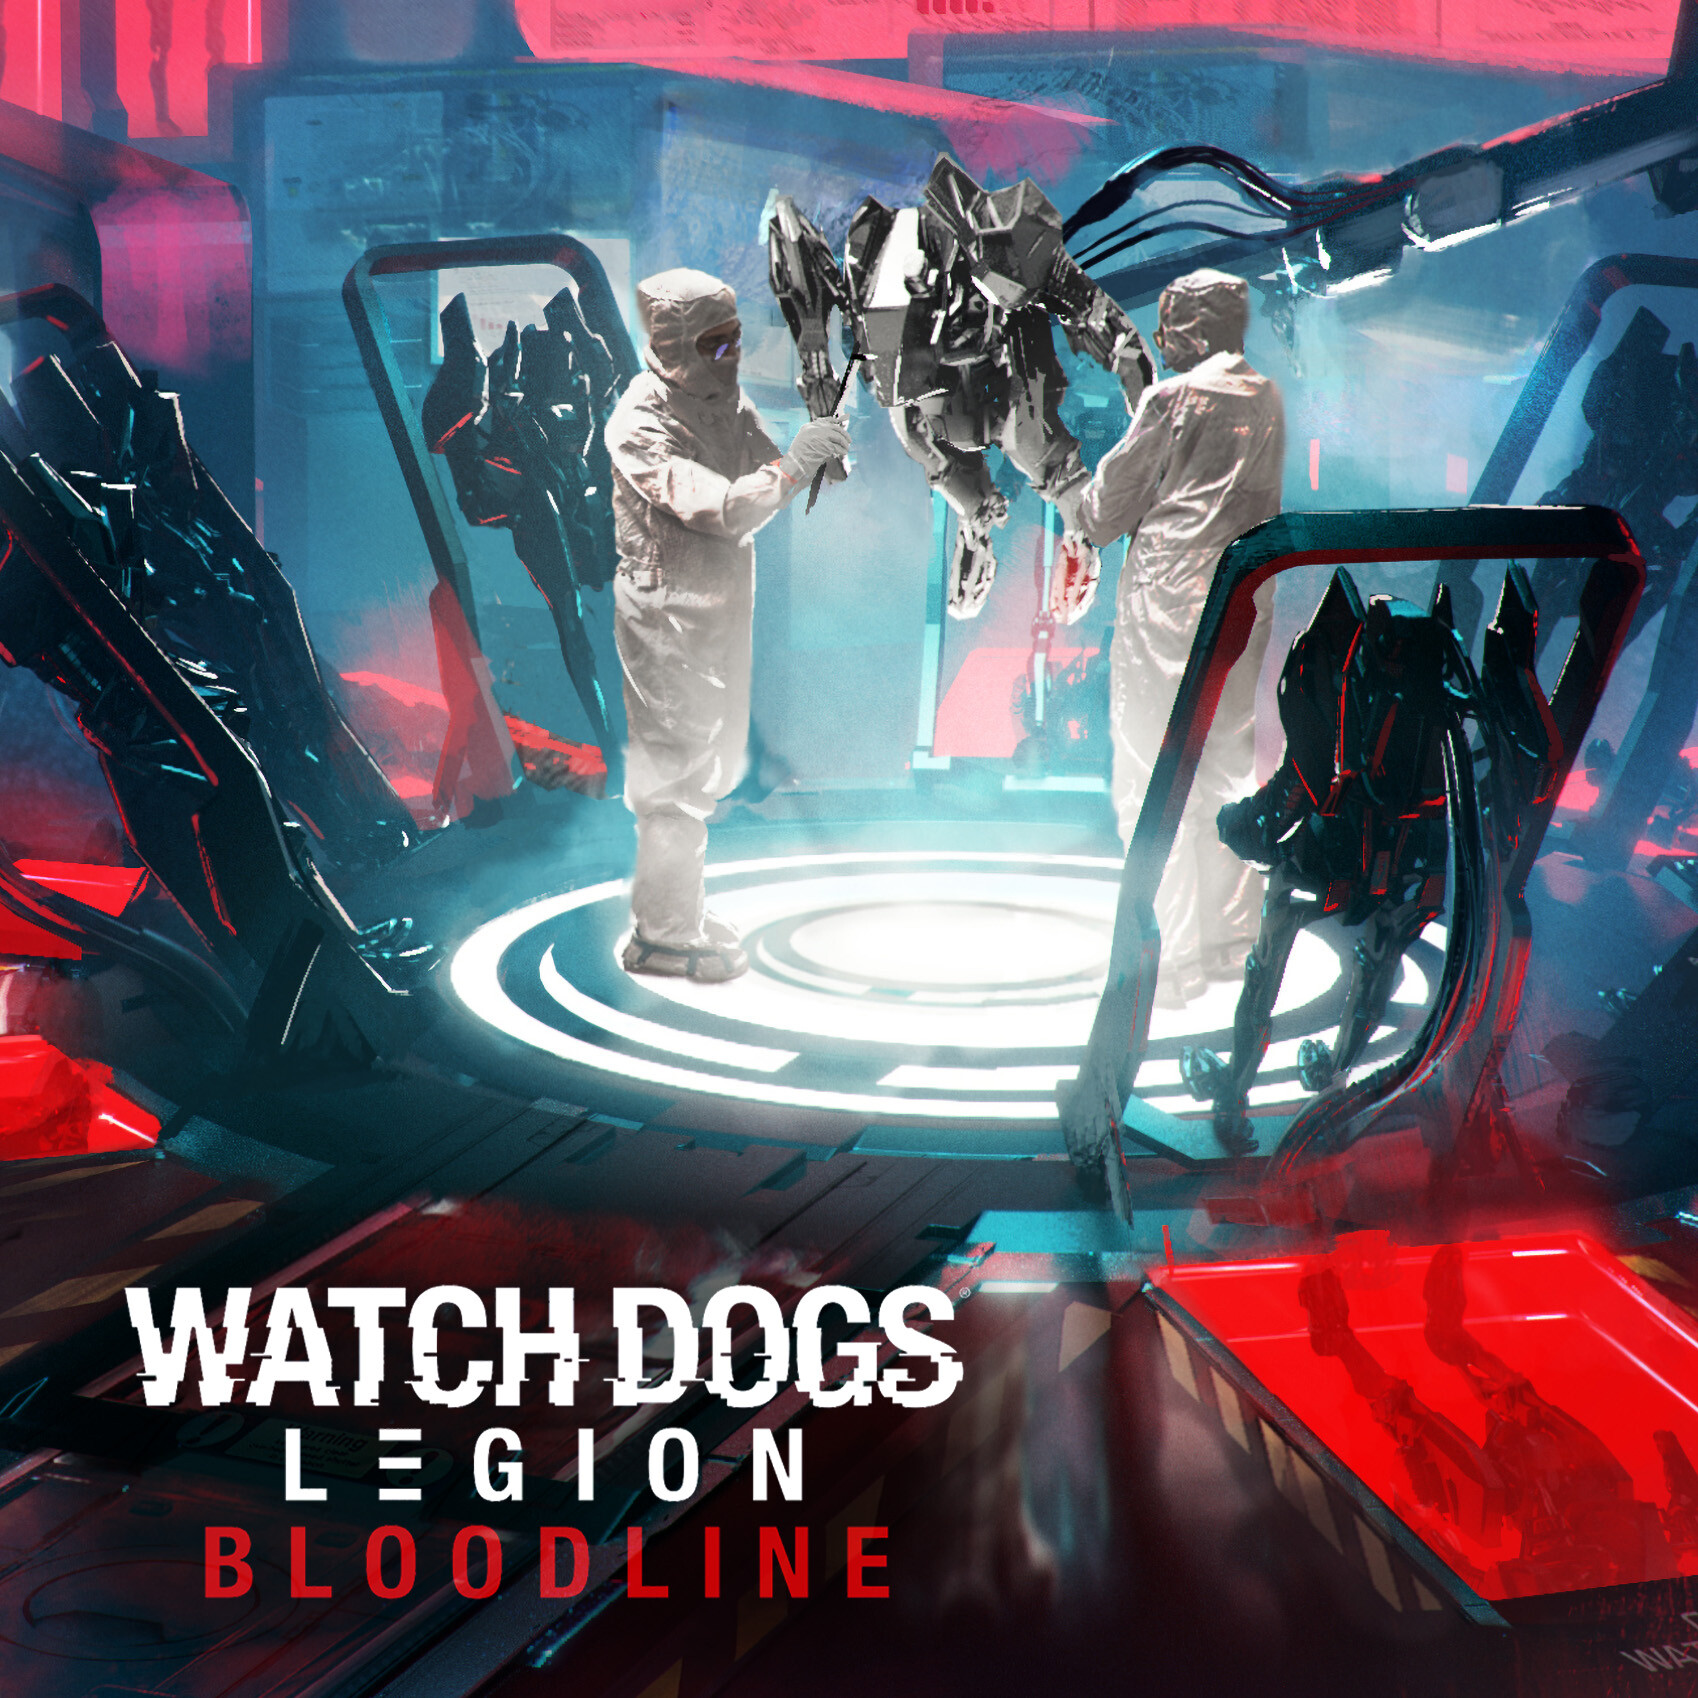 Watch Dogs: Legion - Bloodline Media - OpenCritic